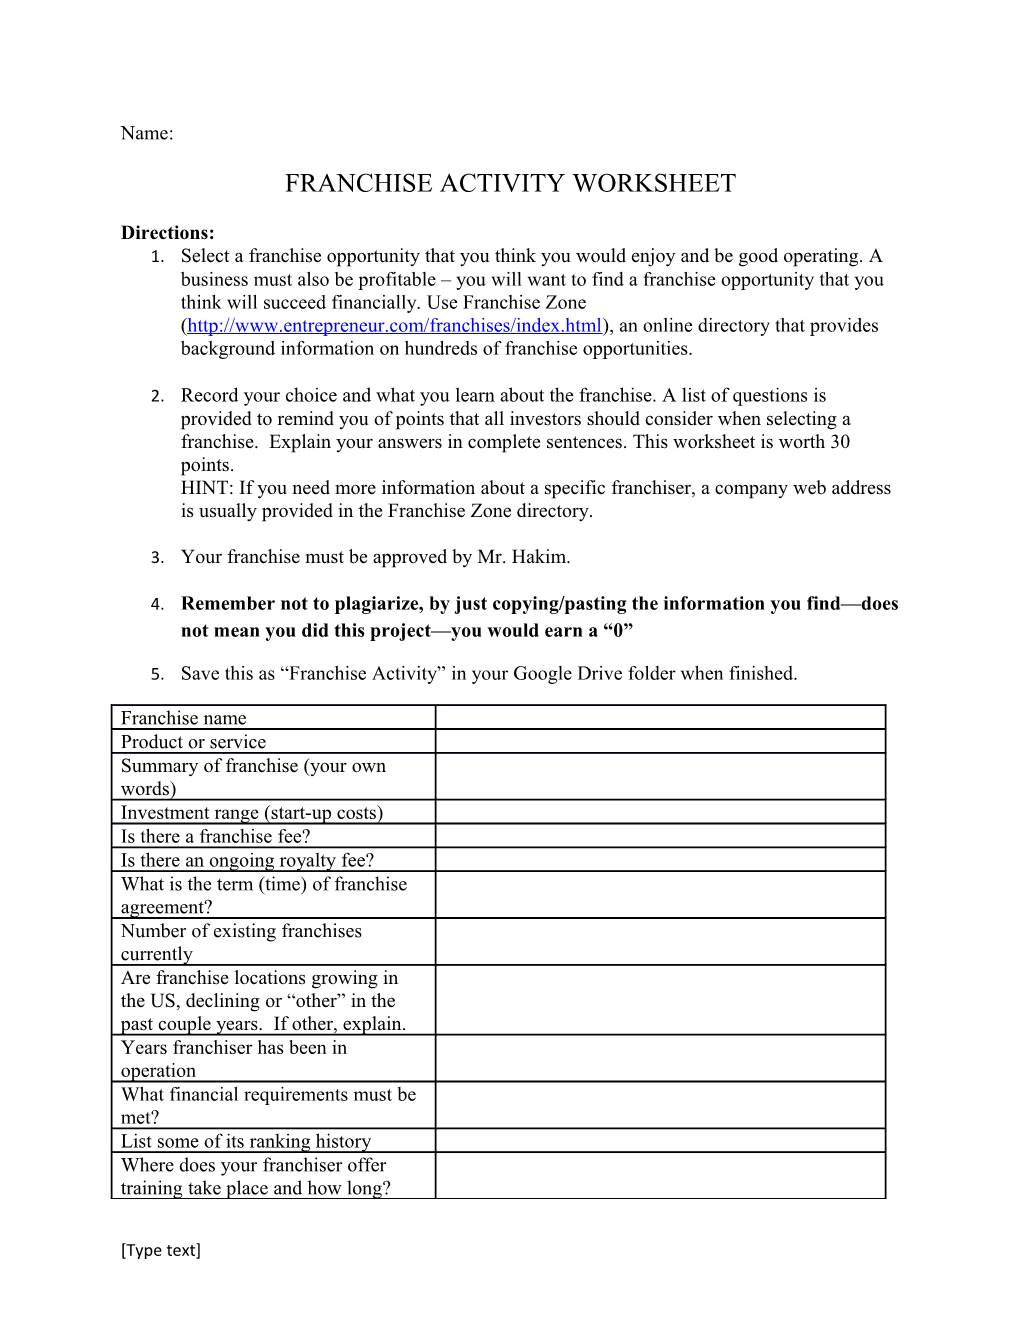 Franchise Activity Worksheet